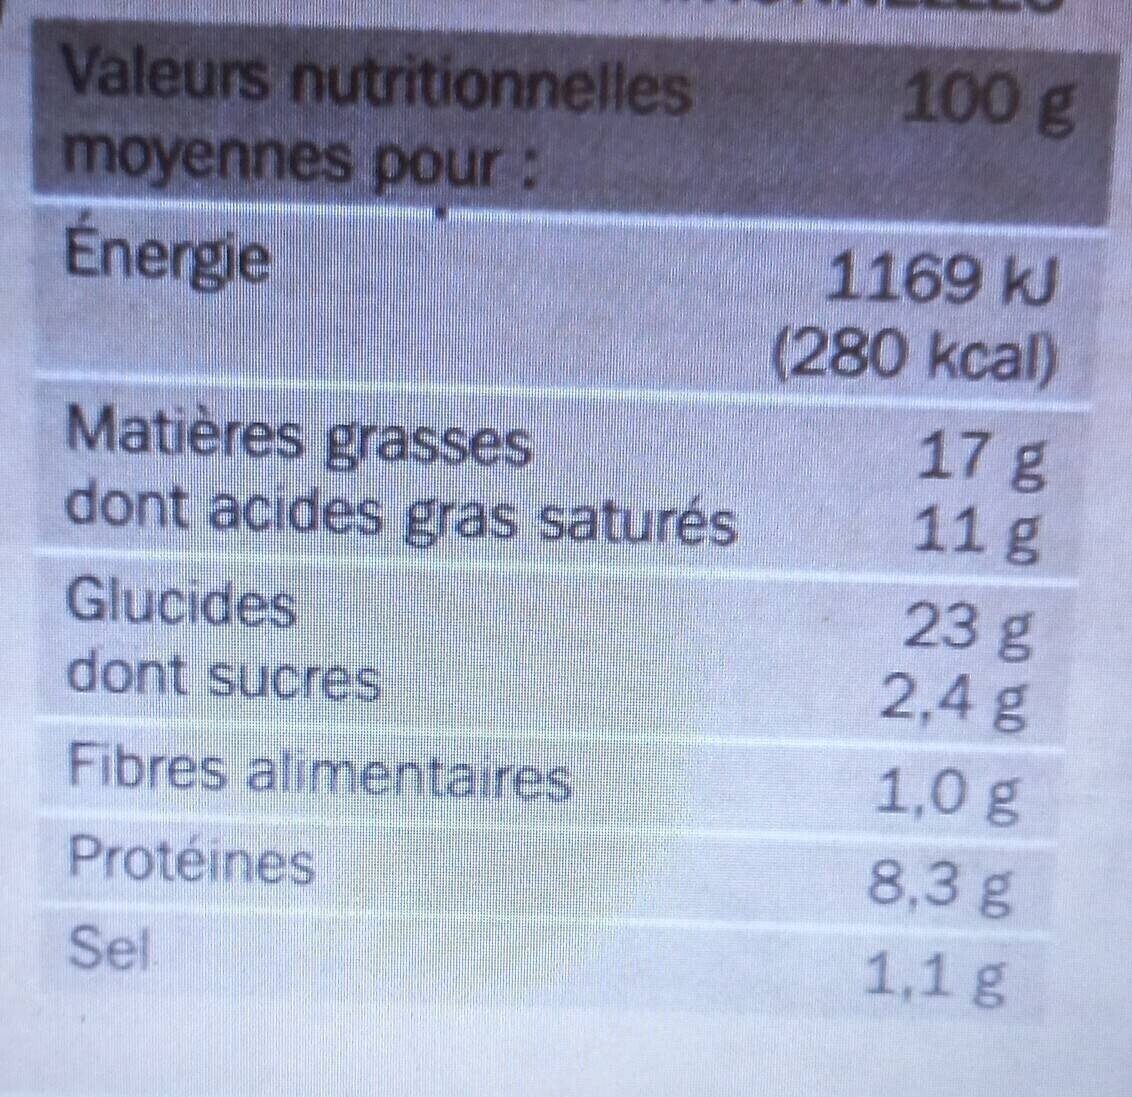 4 Paniers jambon fromage, Surgelé - Nutrition facts - fr